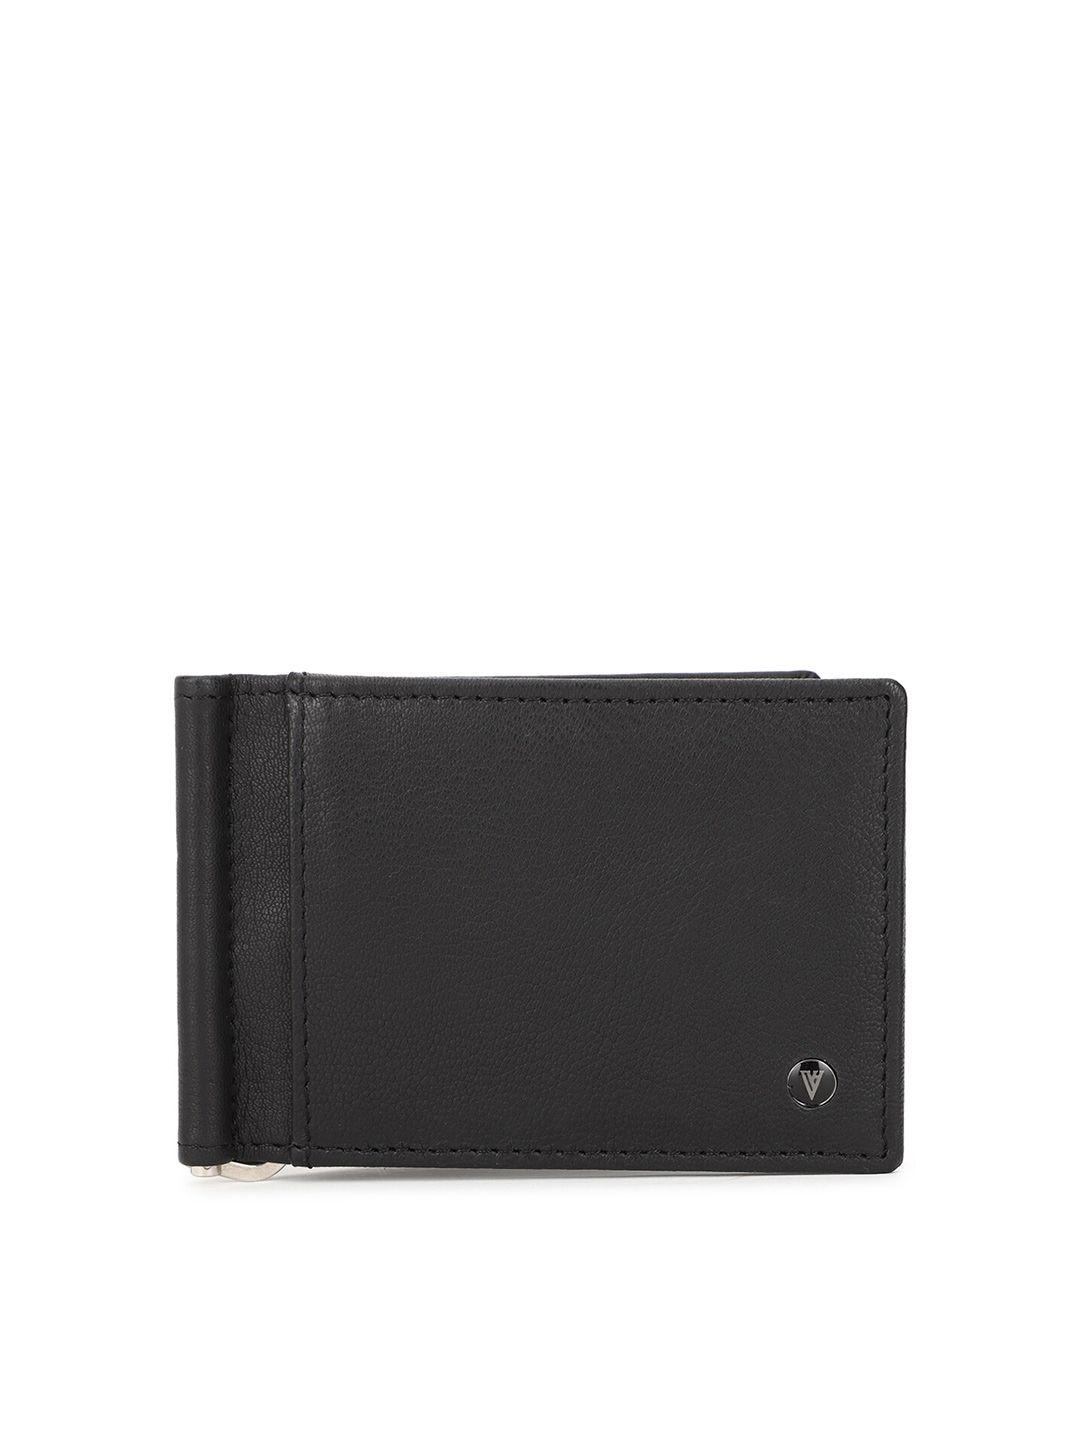 van heusen men black leather two fold wallet